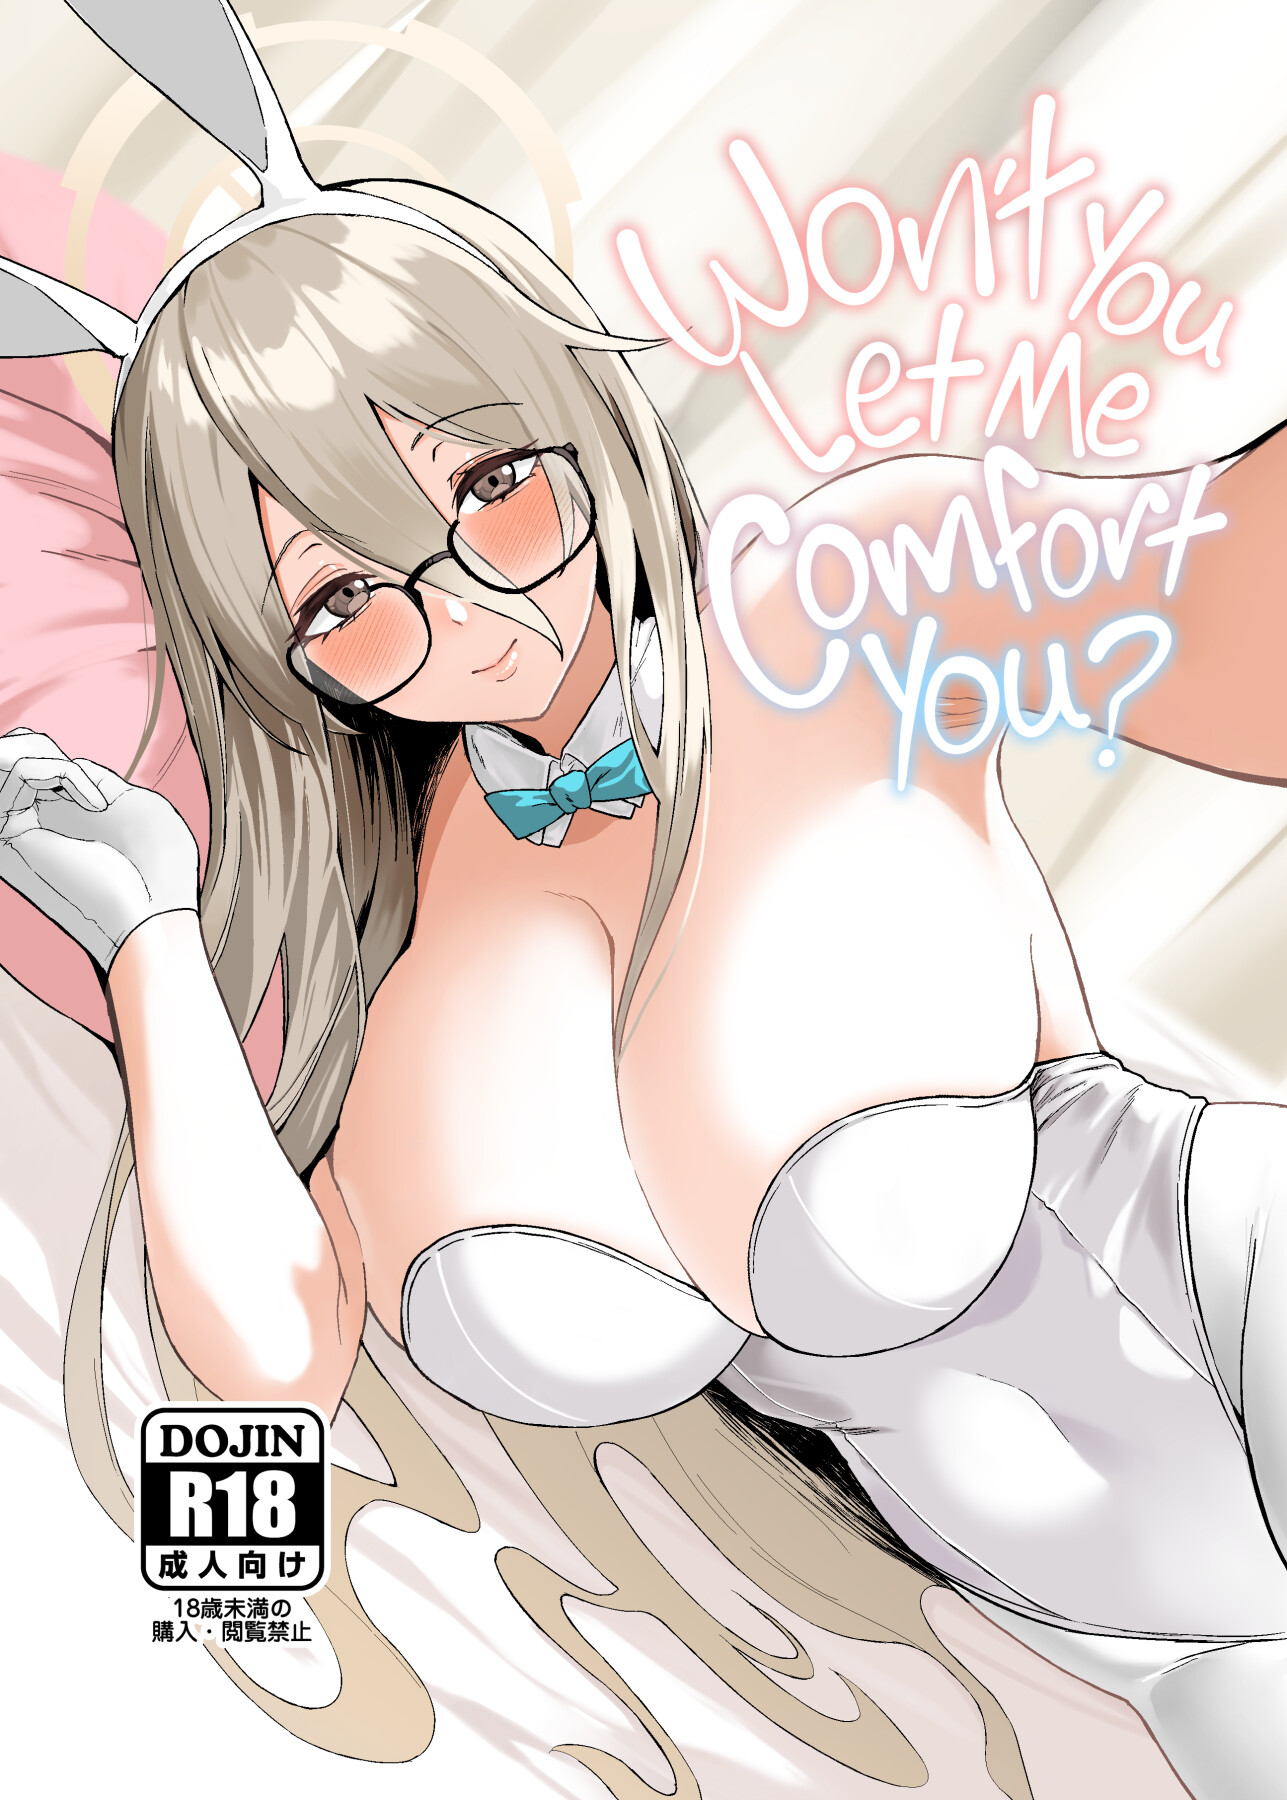 Hentai Manga Comic-Won't You Let Me Comfort You?-Read-1